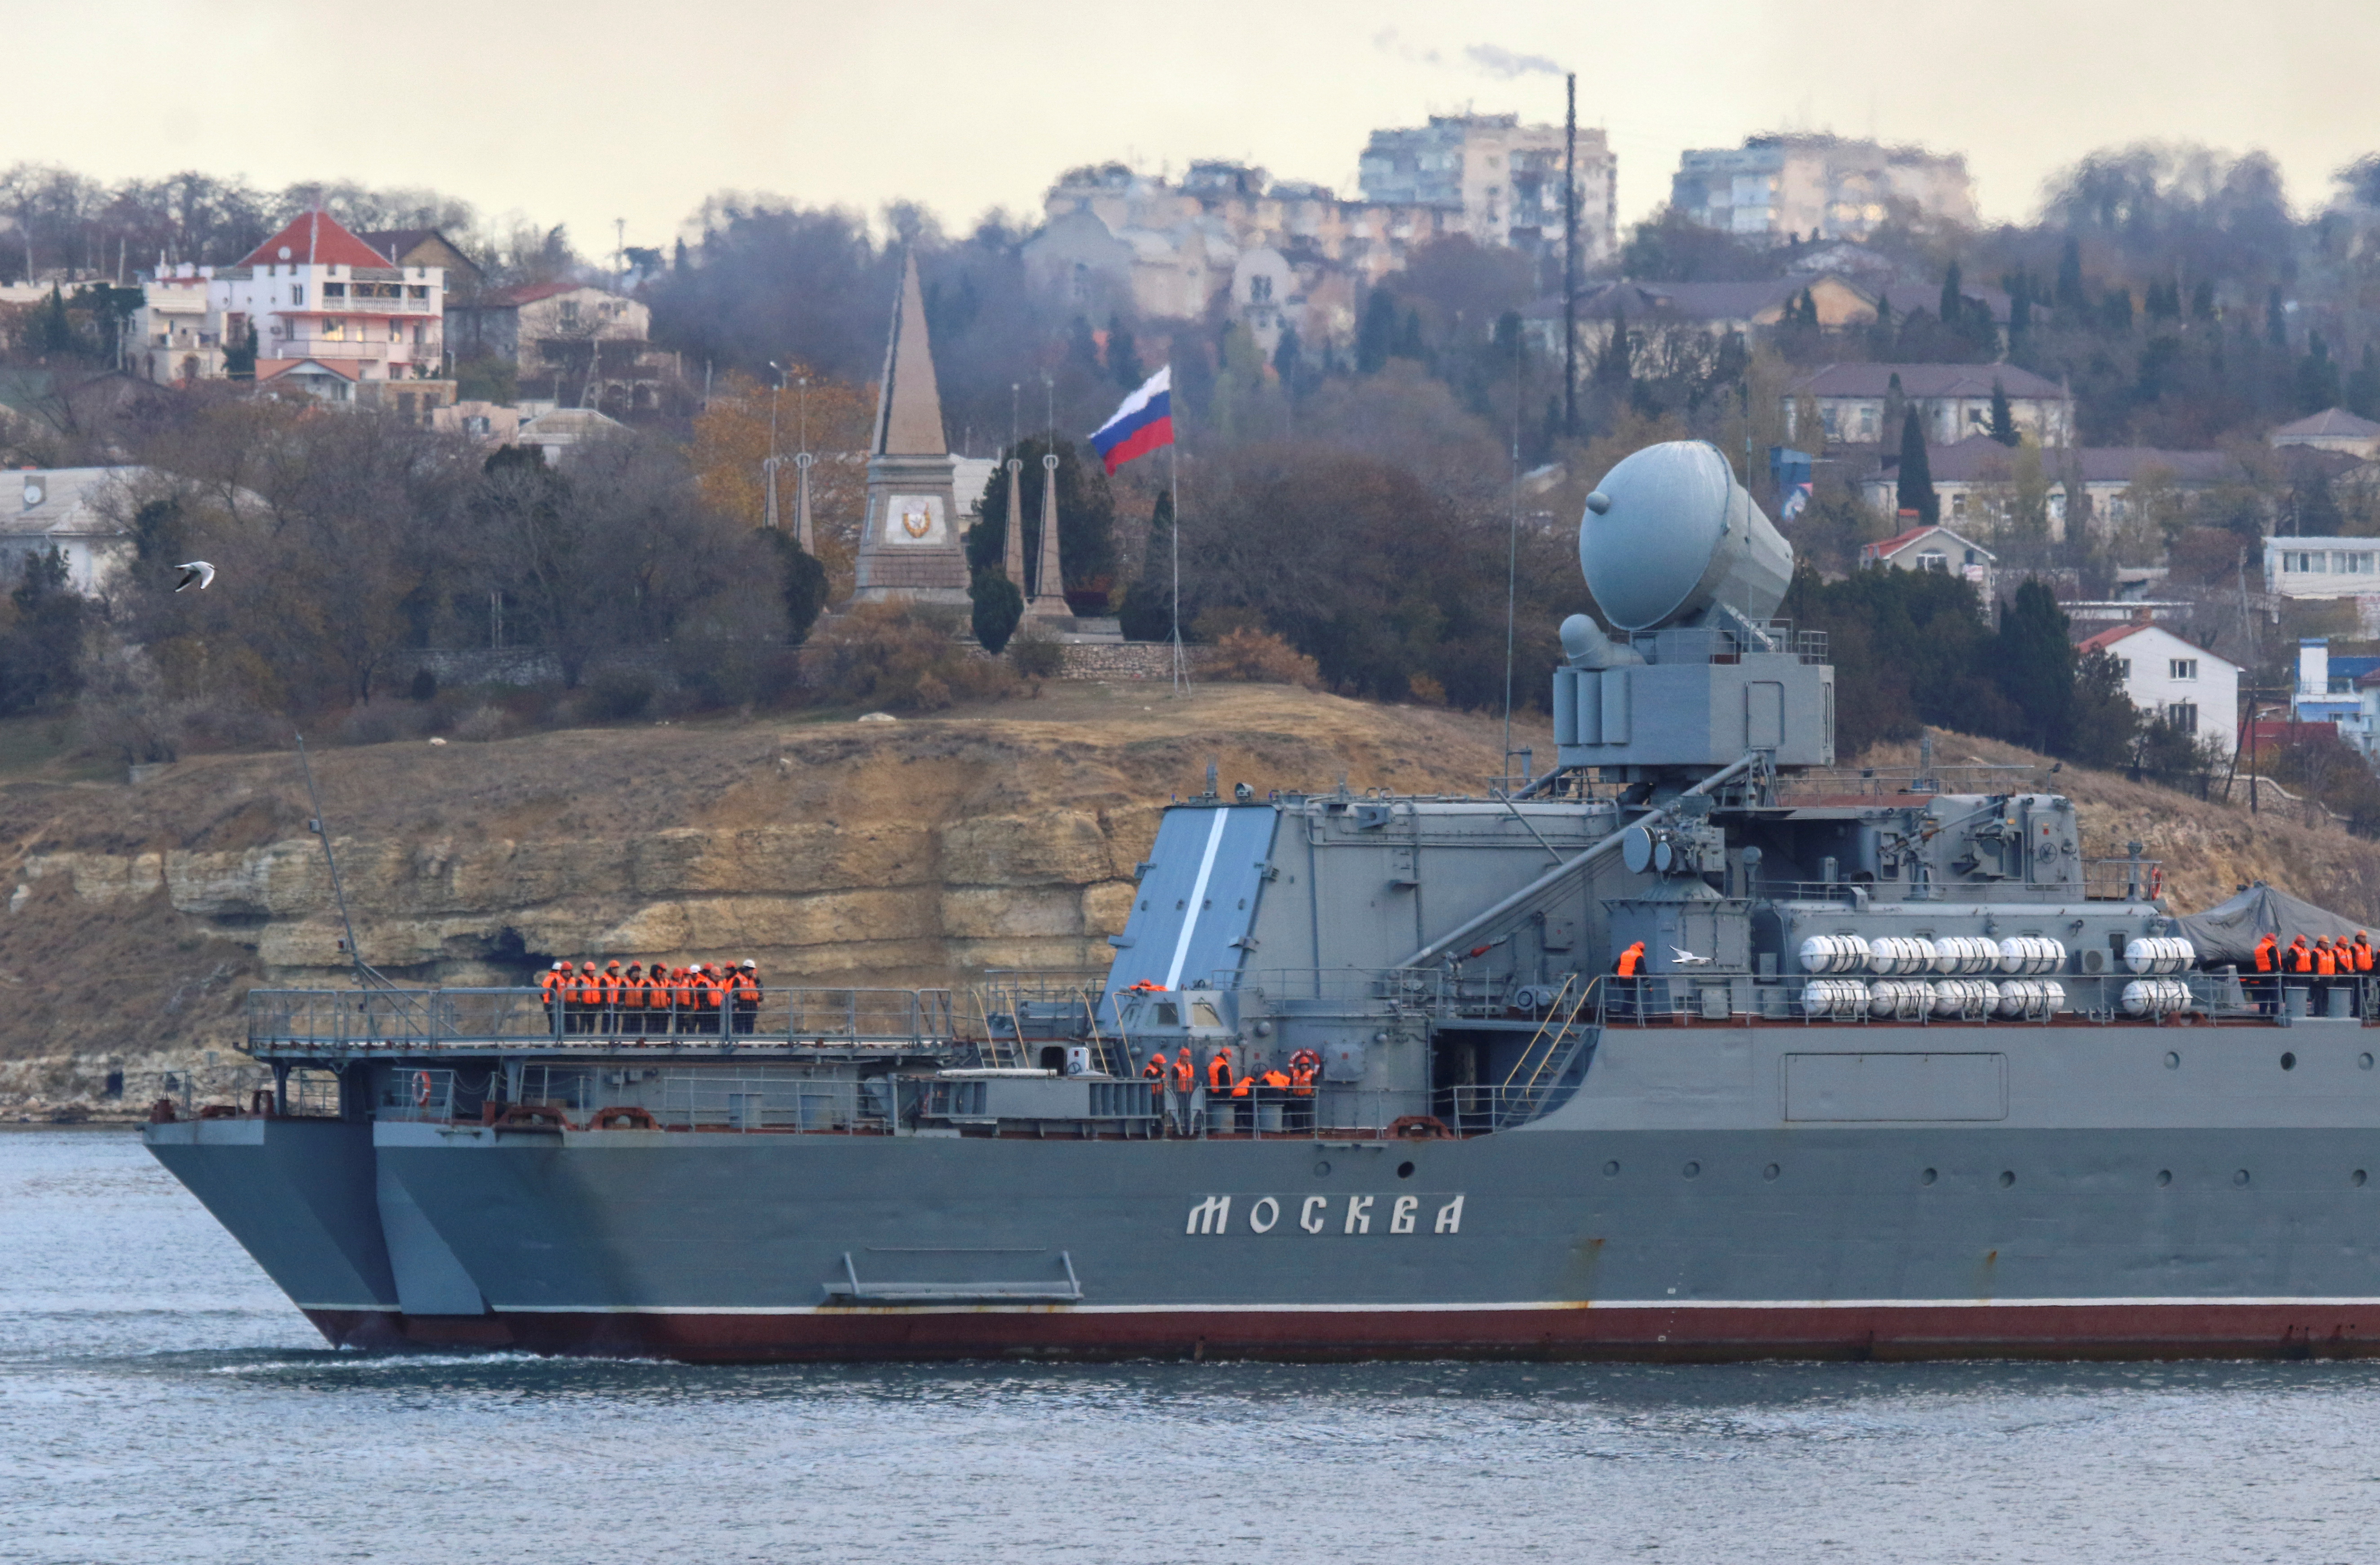 El crucero de misiles guiados Moskva (Moscú) navega de vuelta a un puerto después de seguir a los buques de guerra de la OTAN en el Mar Negro, en el puerto de Sebastopol, Crimea (REUTERS/Alexey Pavlishak)